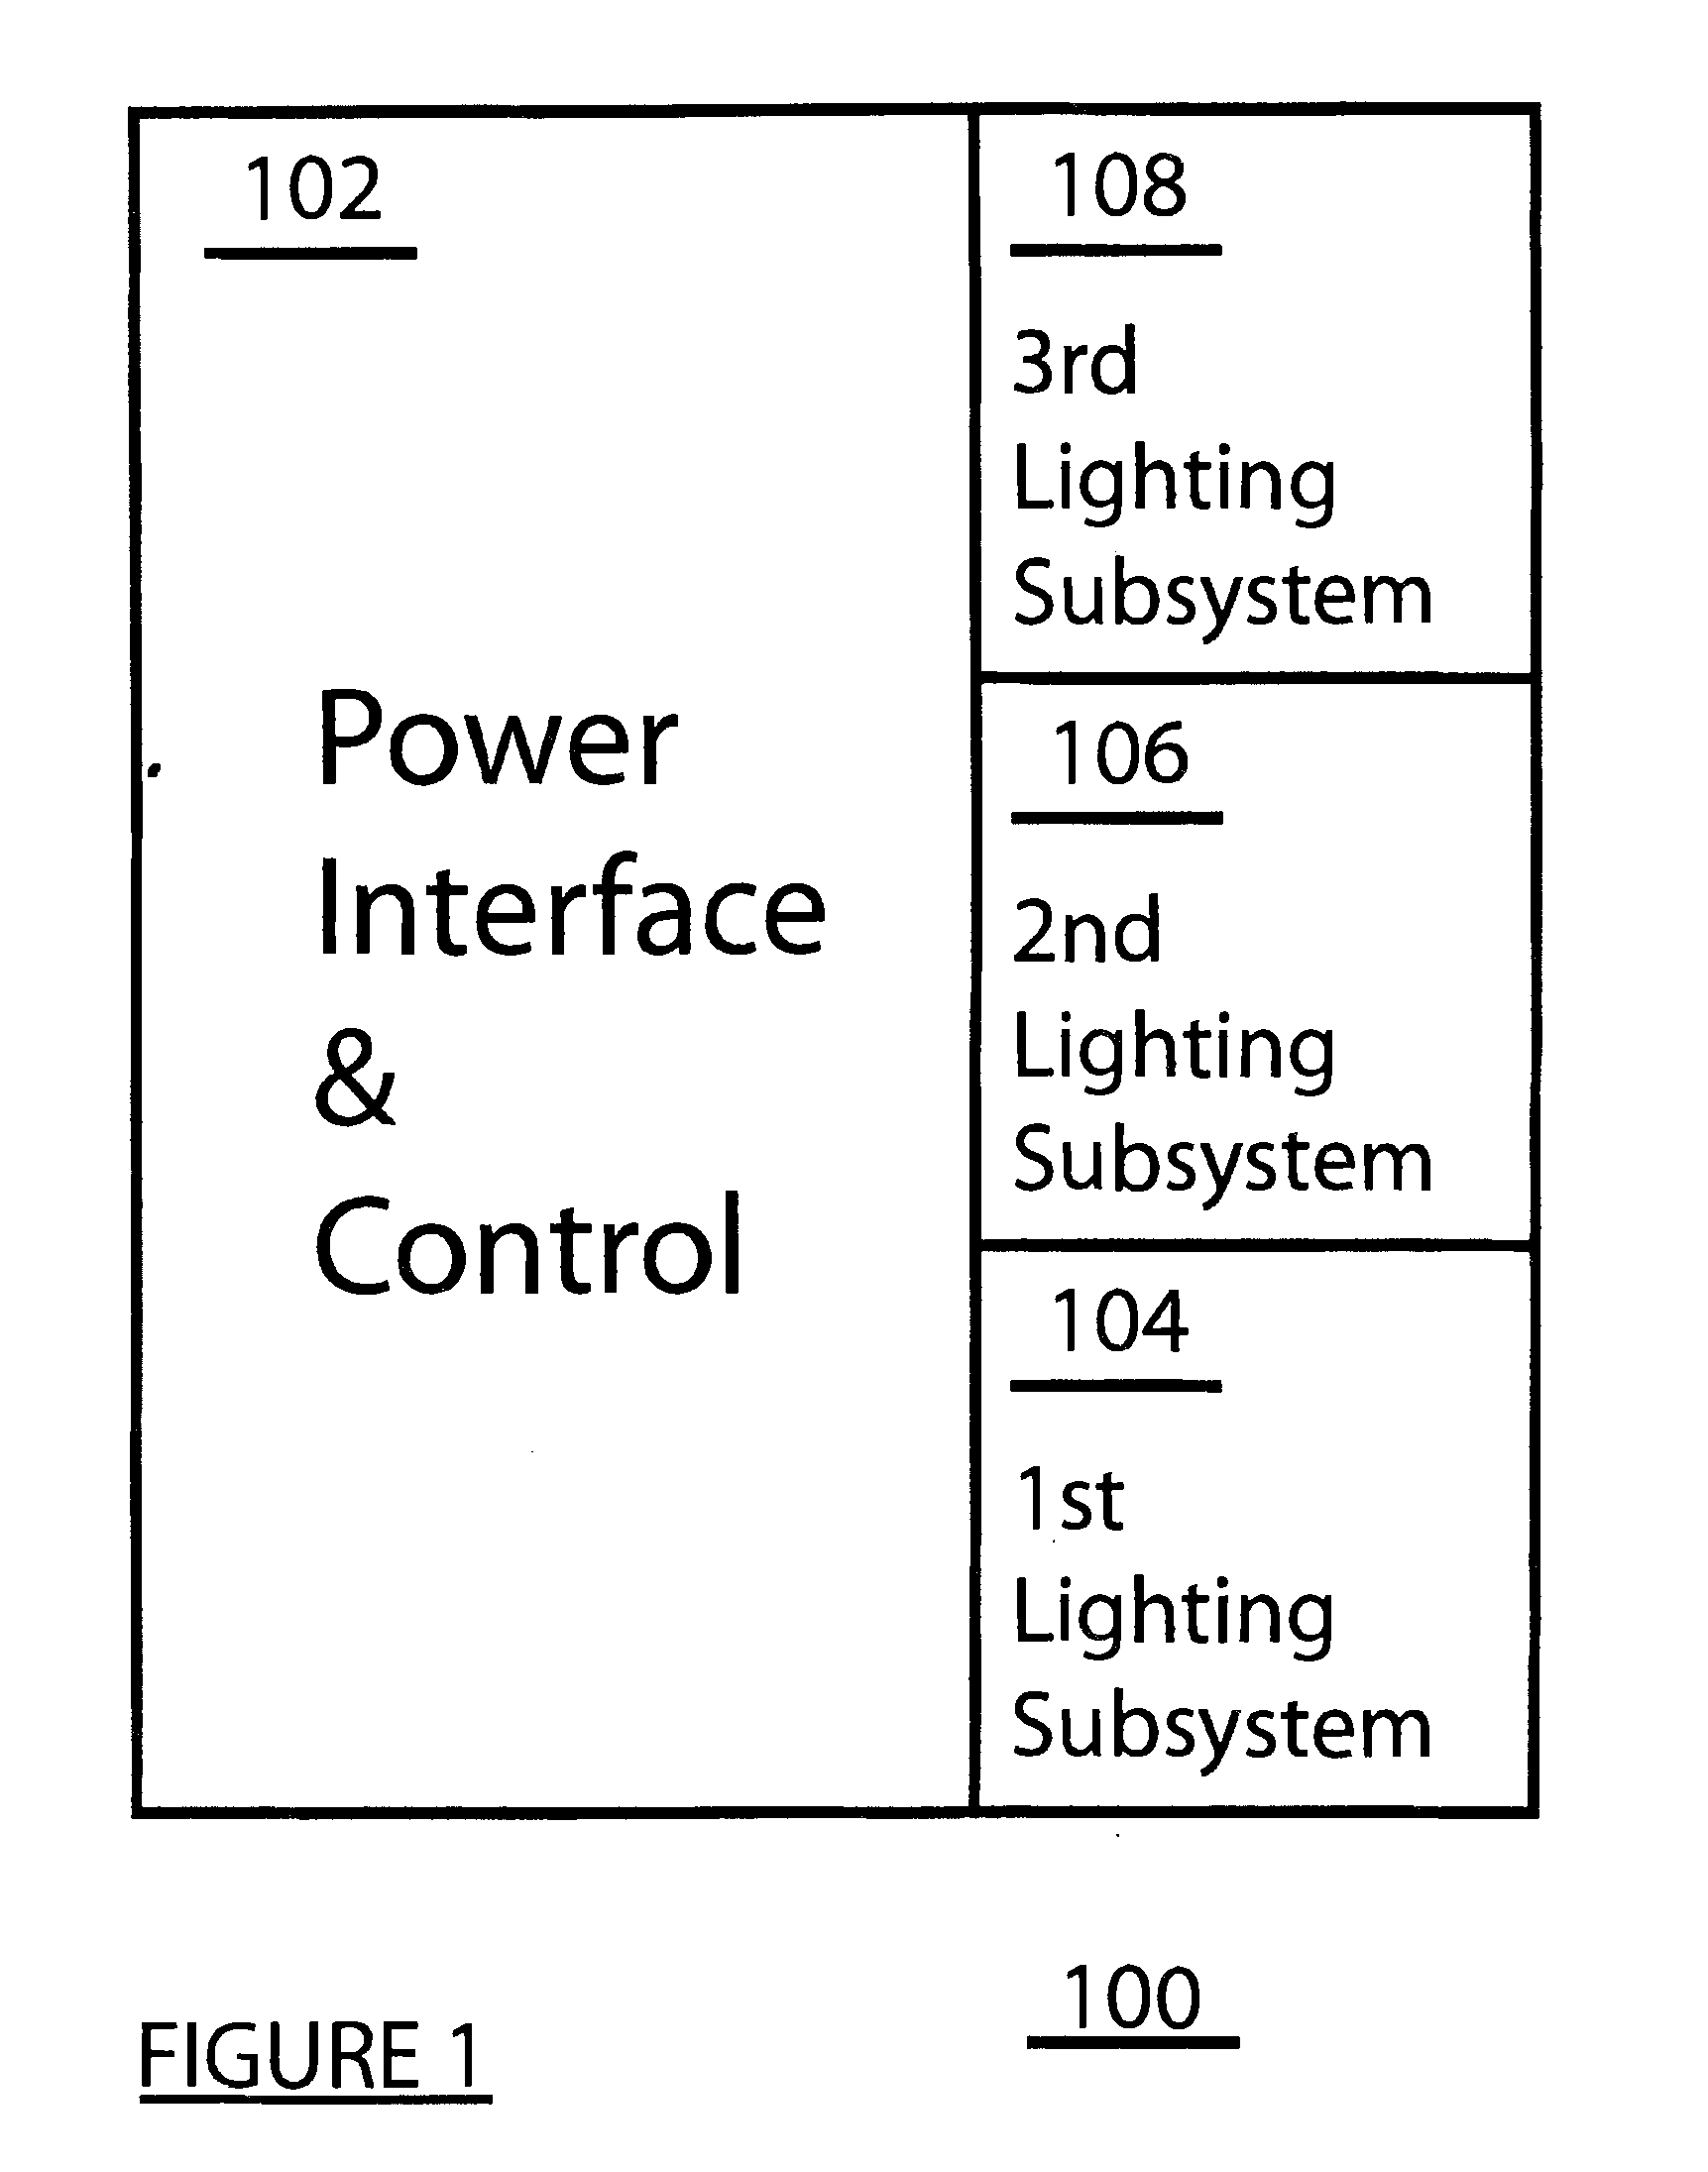 Advanced low voltage lighting system